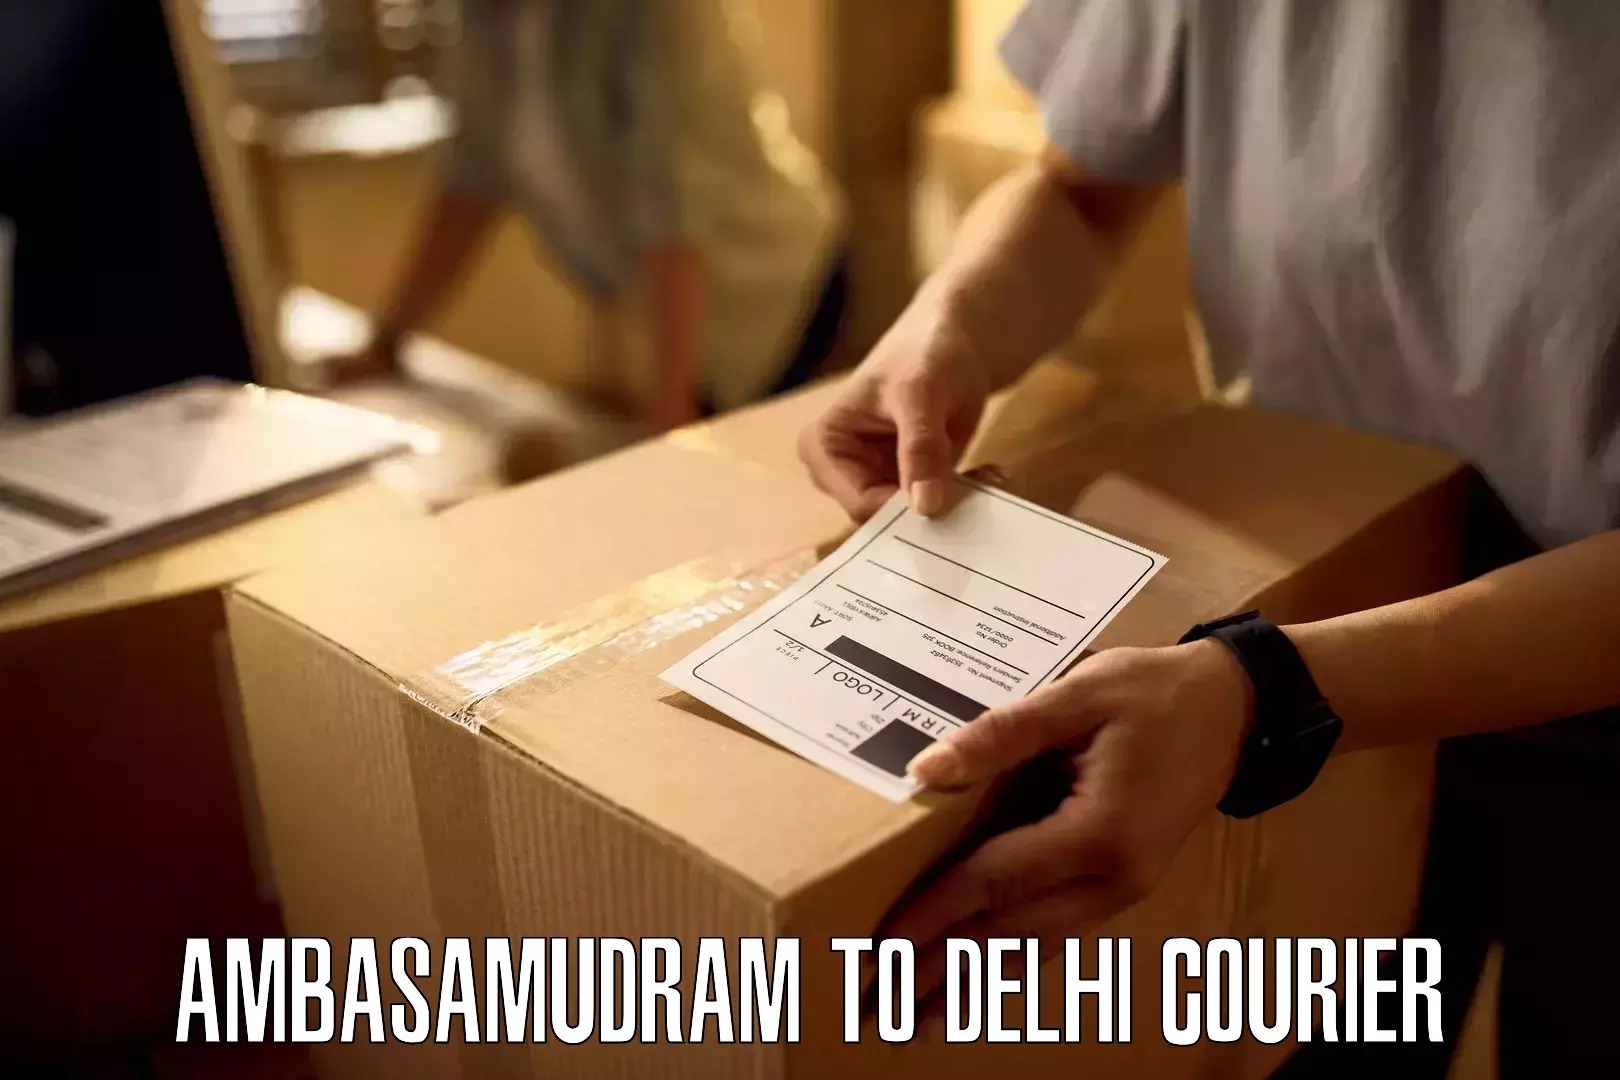 Nationwide delivery network Ambasamudram to Delhi